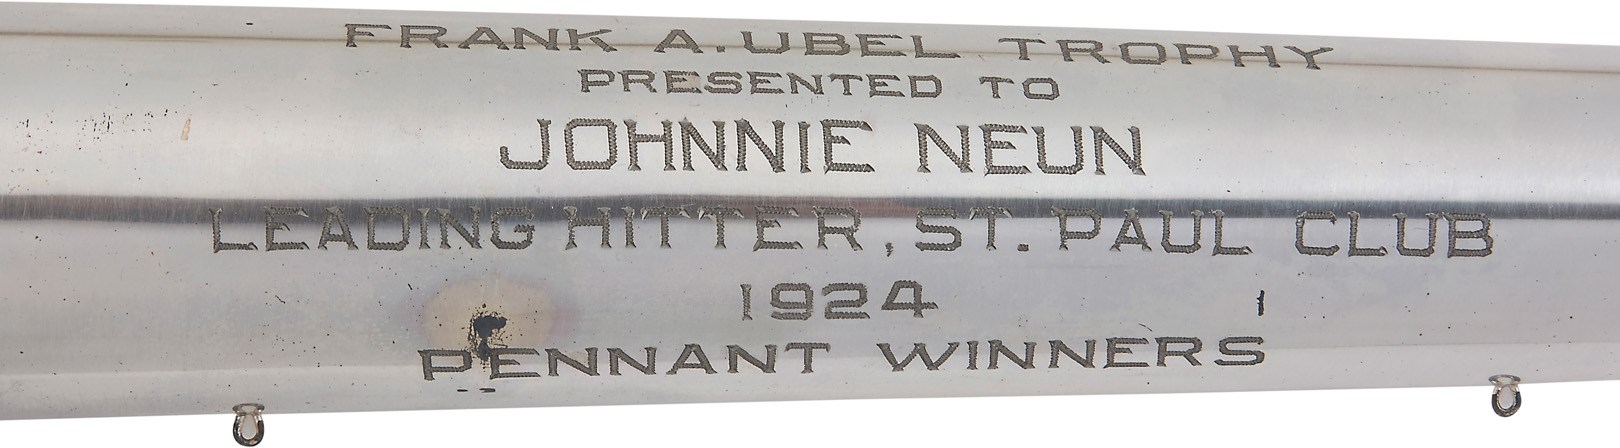 Sports Rings And Awards - 1924 Johhnie Neun Batting Championship "Silver" Bat and Ball